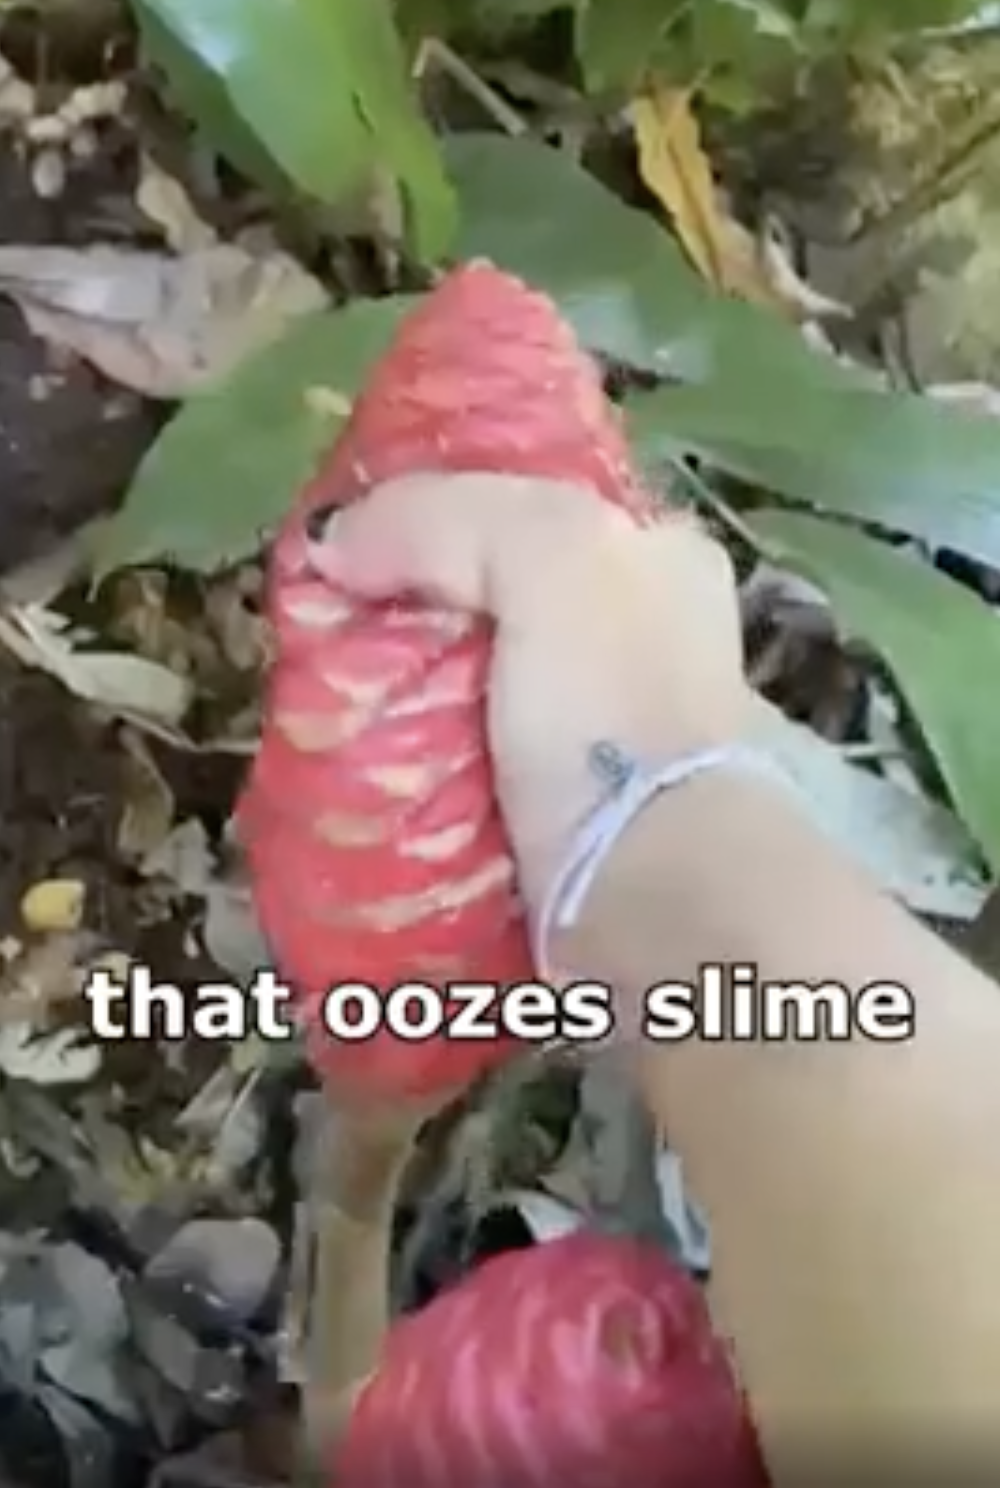 medicinal mushroom - that oozes slime